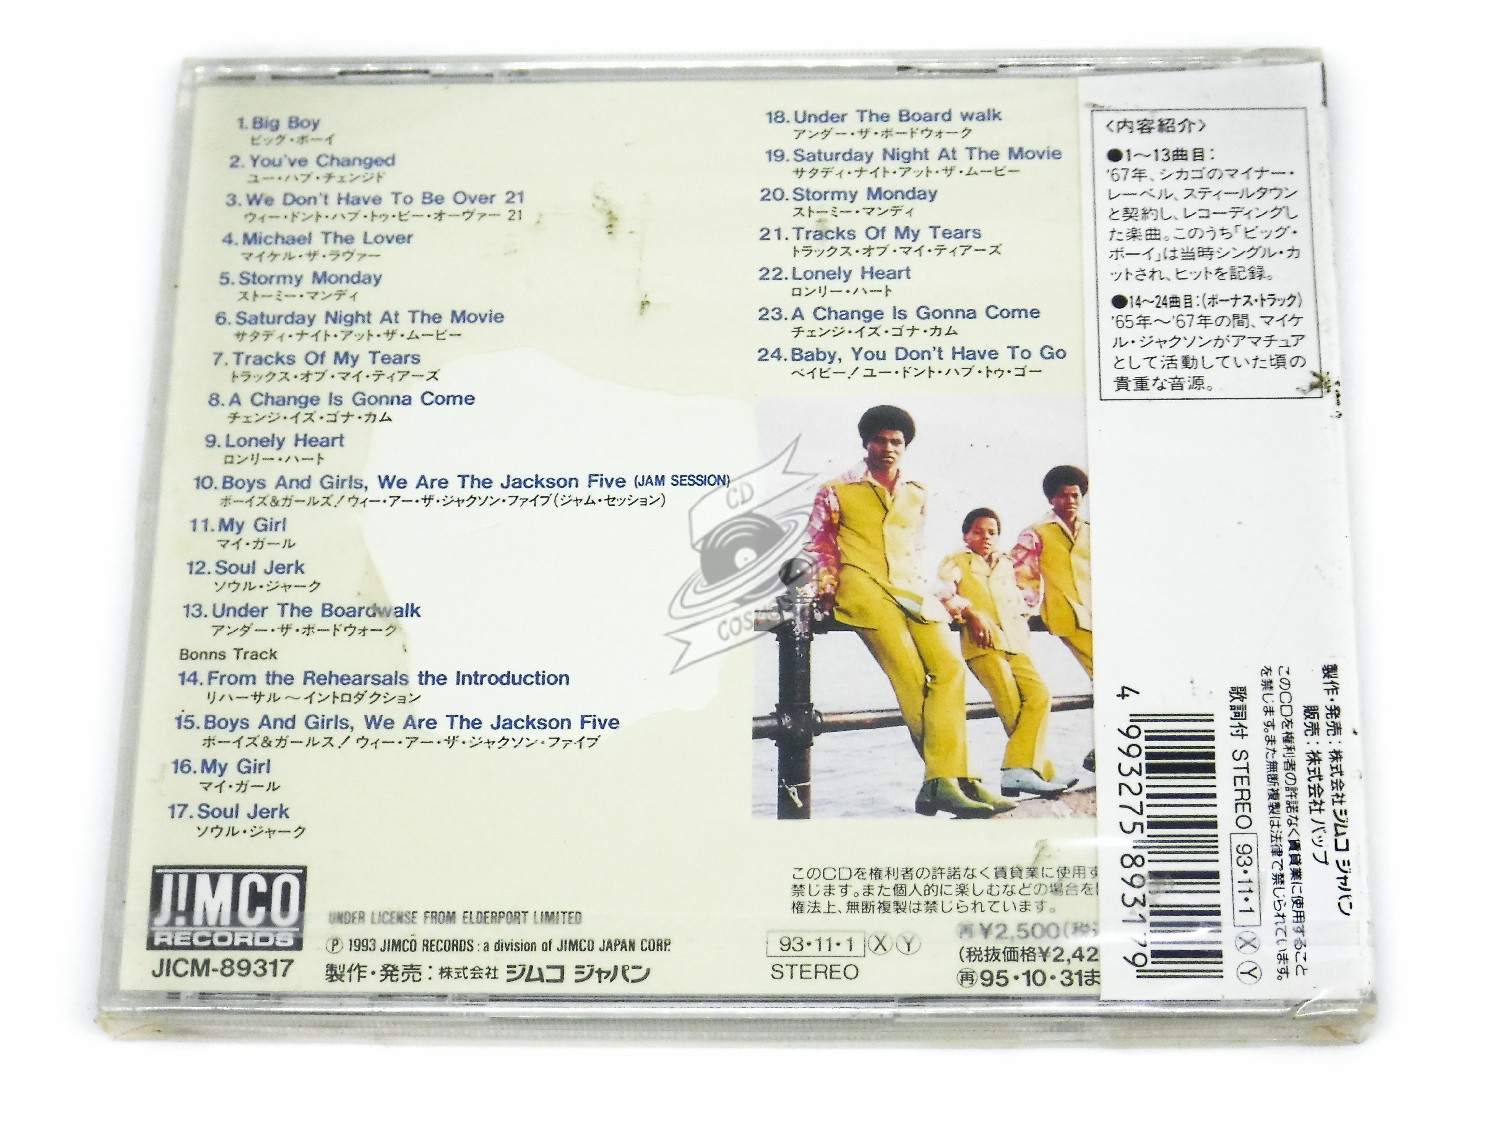 Jackson Five Featuring Michael Jackson - Big Boy - cdcosmos